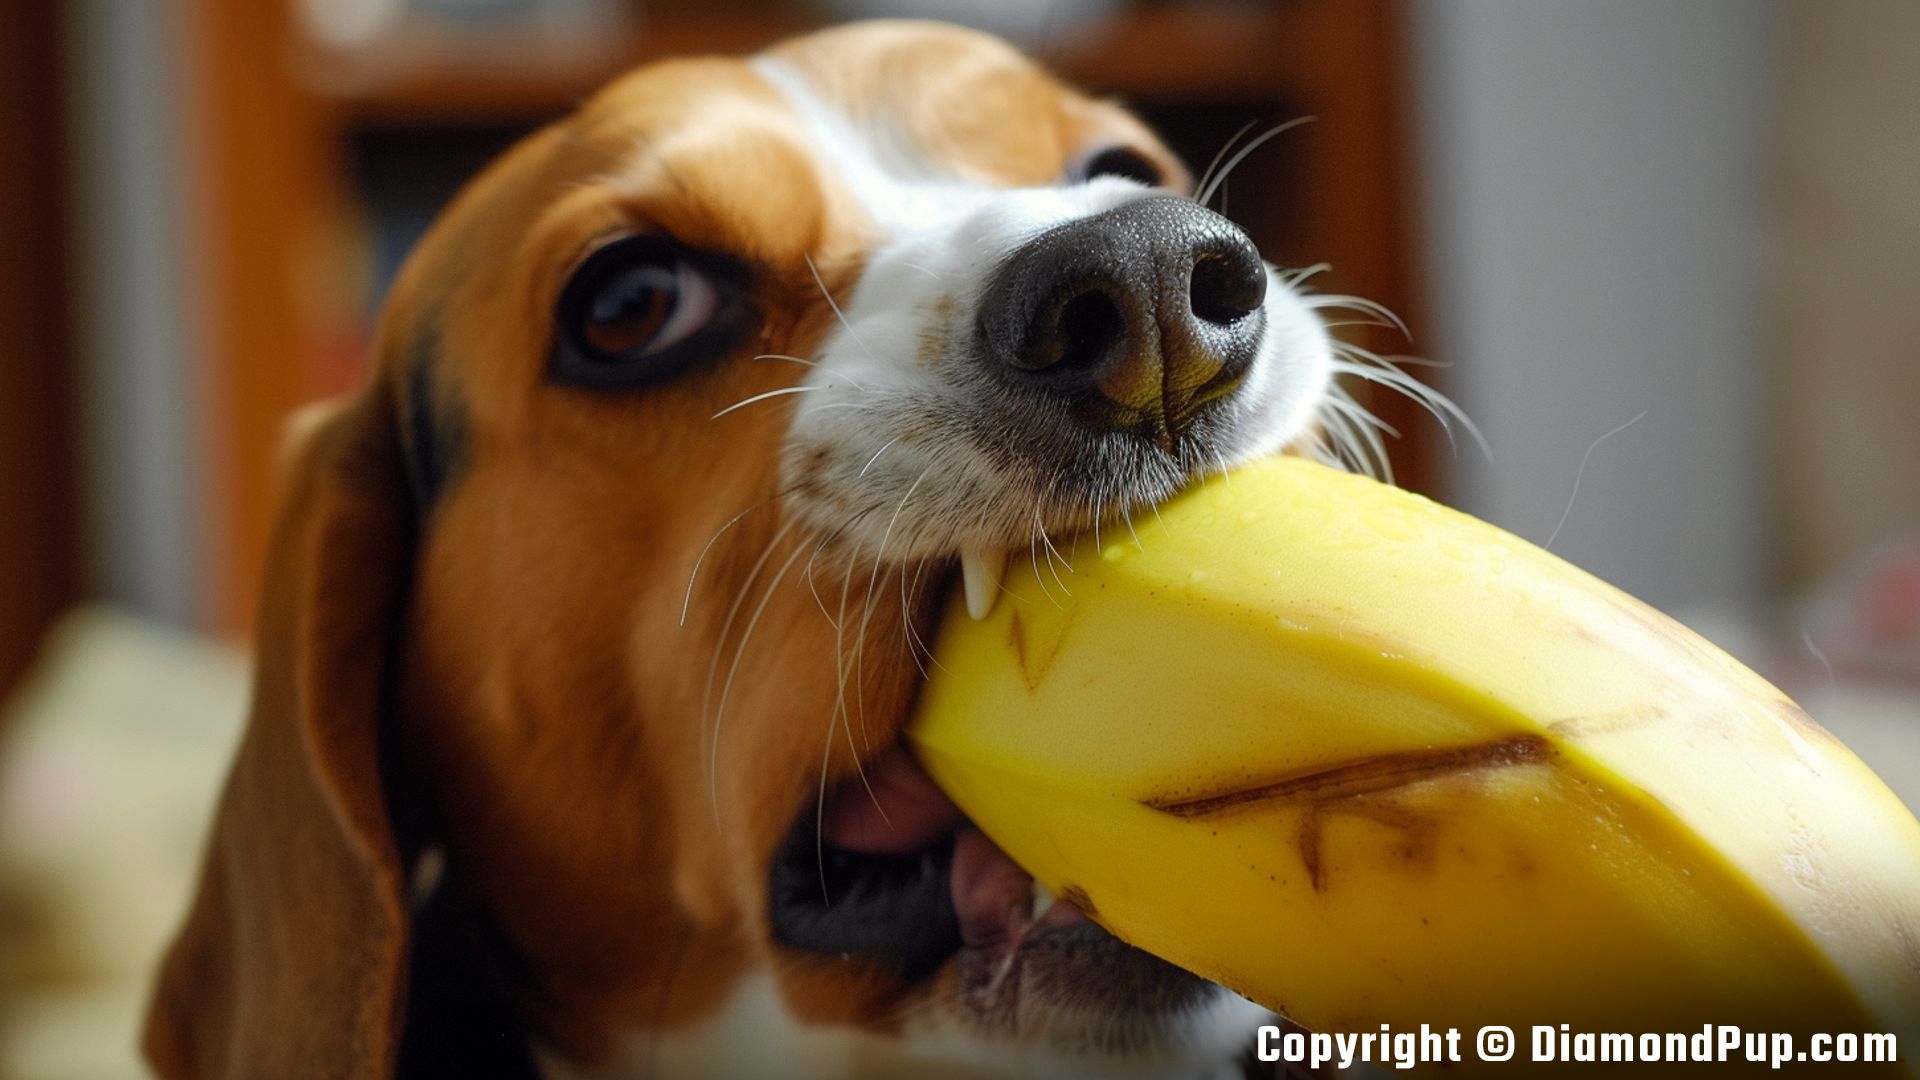 Photograph of a Cute Beagle Snacking on Banana